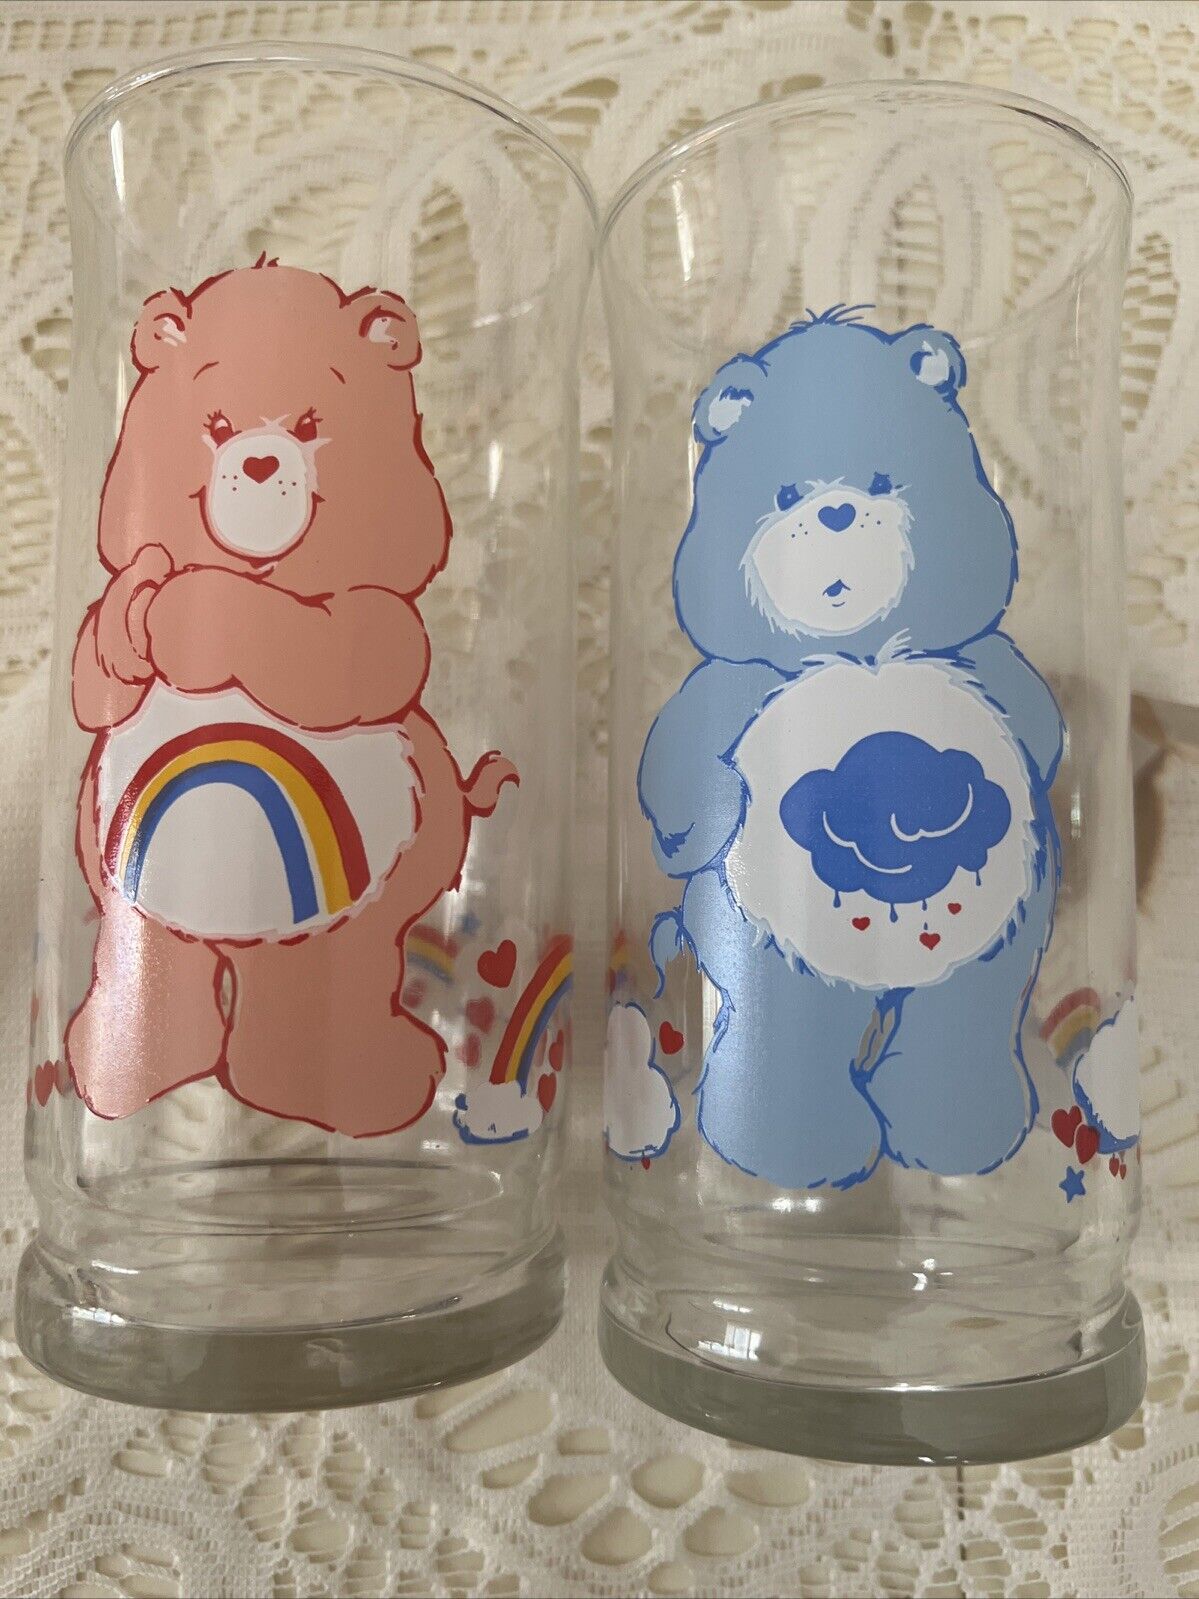 Vtg 1983 Care Bears Pizza Hut Tumbler Glass Set Of 2 Cheer & Grumpy Rainbow